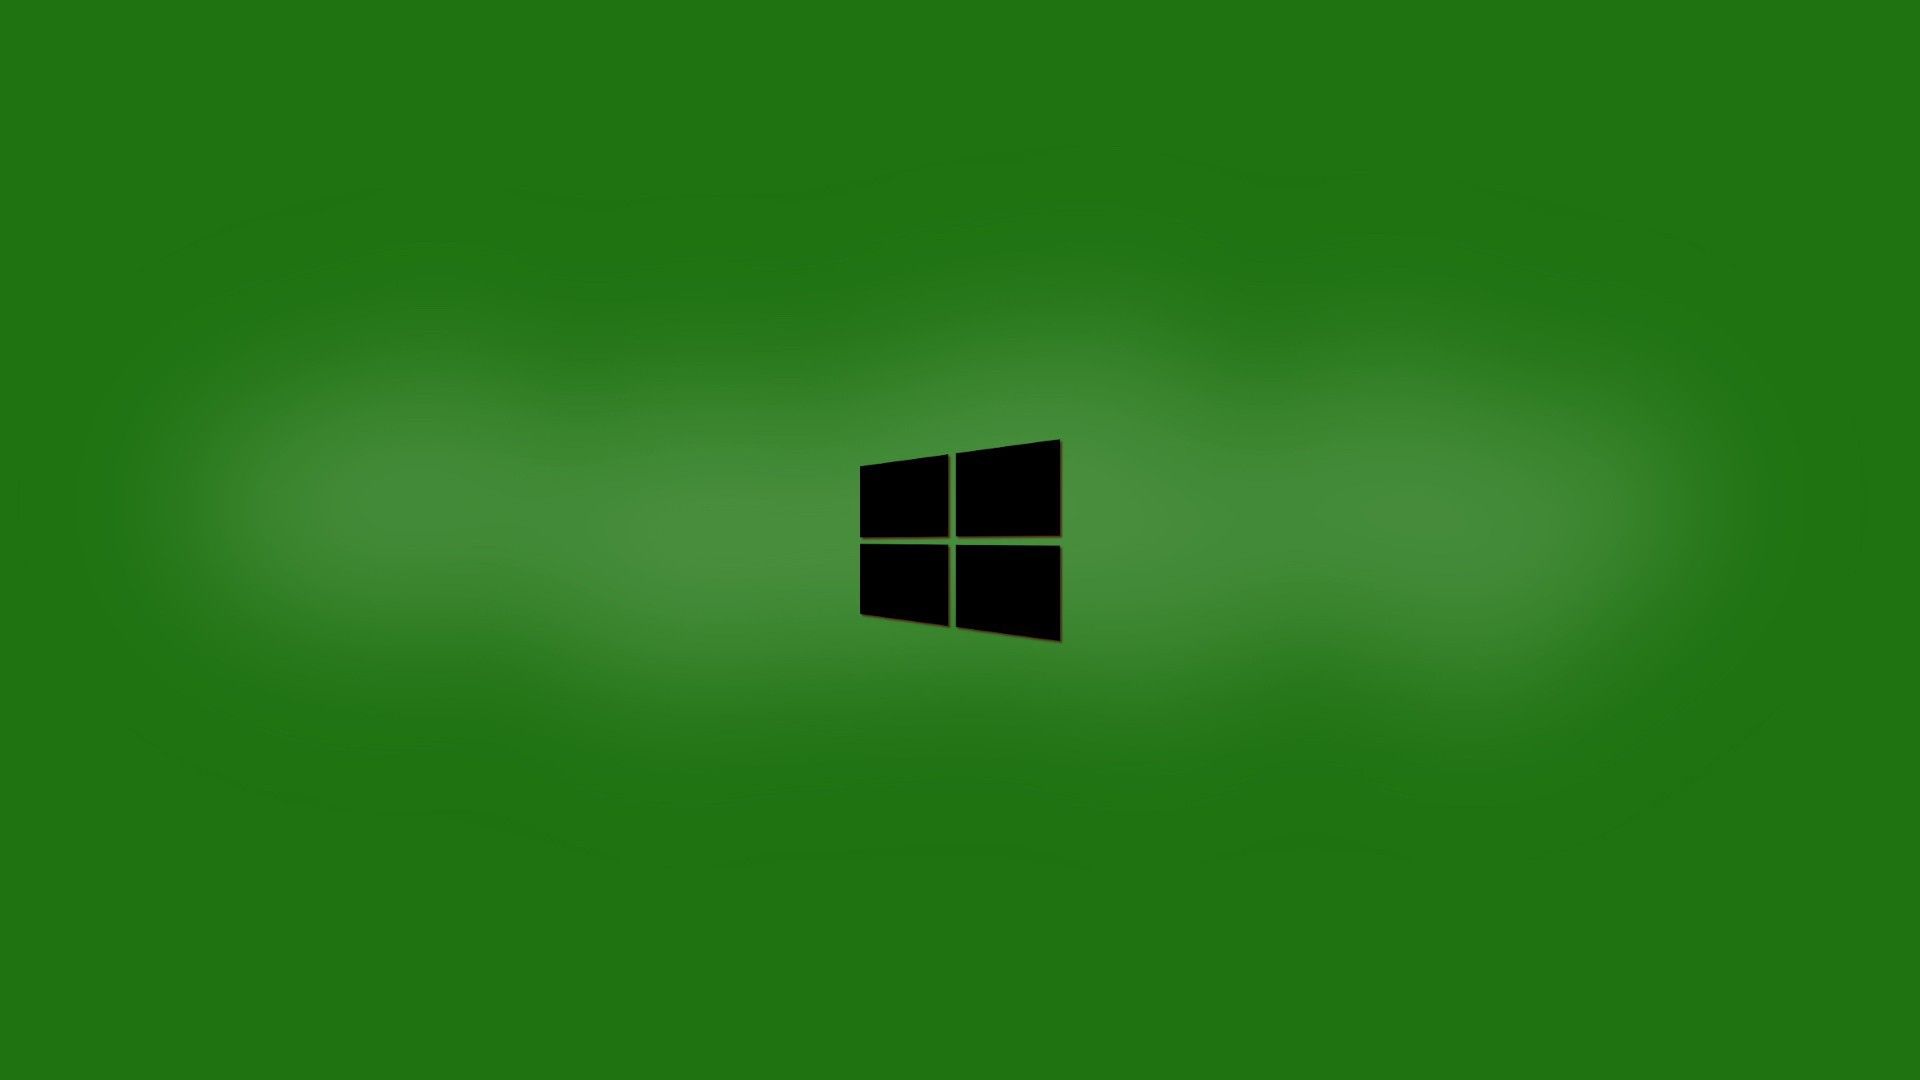 Best Windows 10 Wallpapers HD 1080p Tech 63